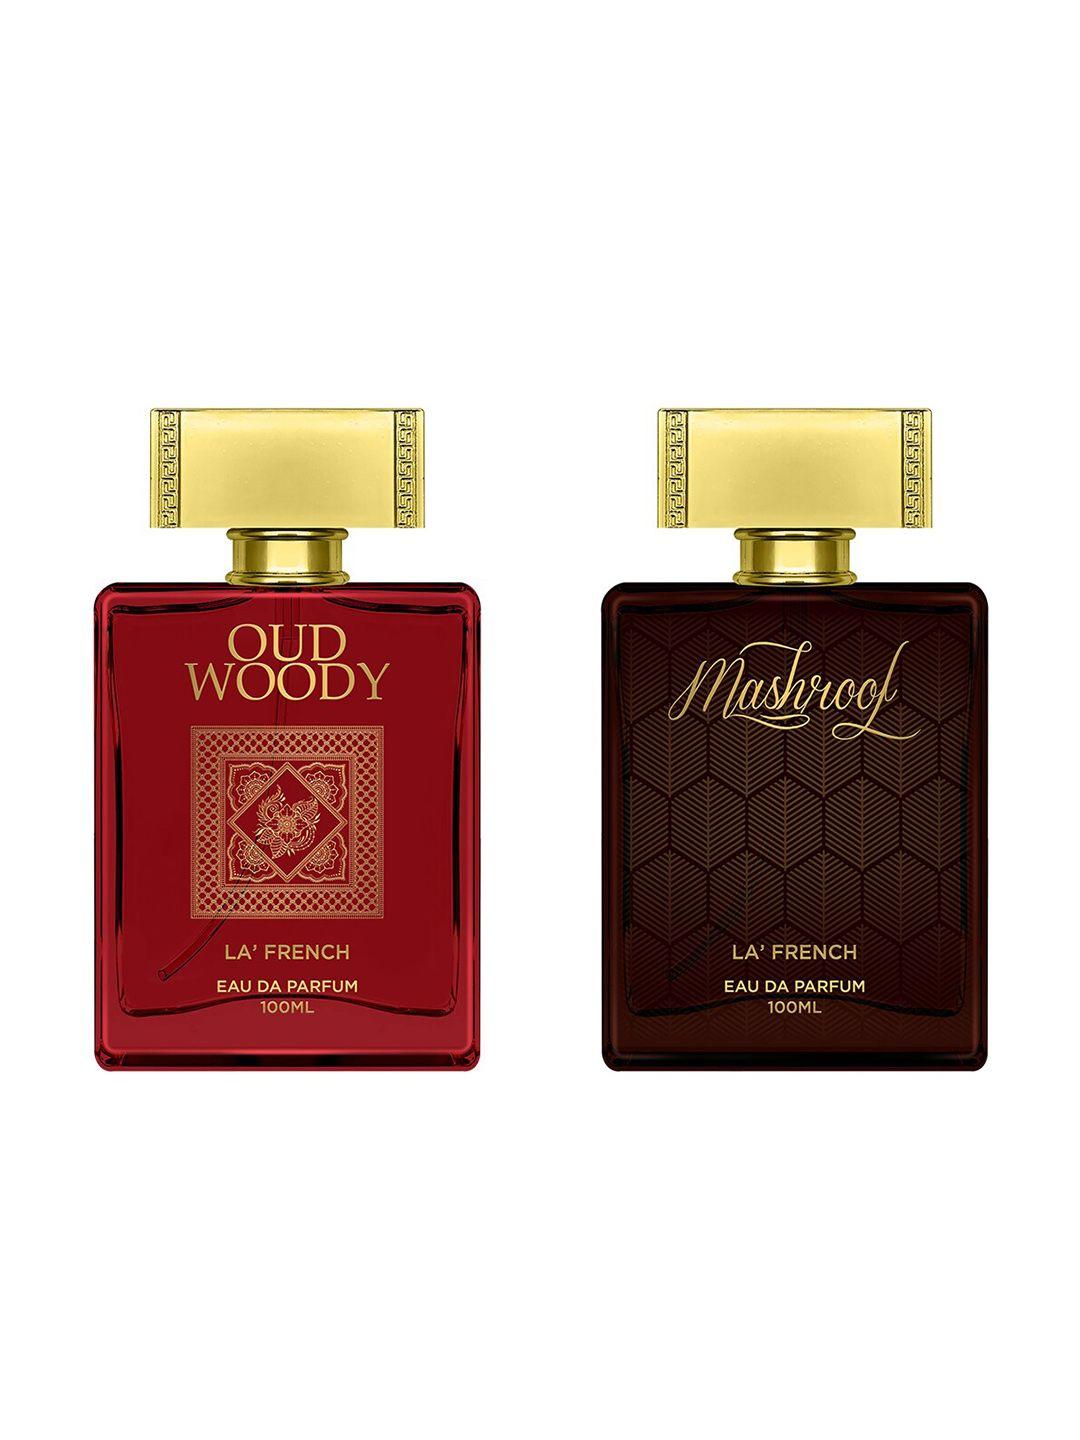 la french set of 2 oud woody & mashroof eau de parfum - 100ml each